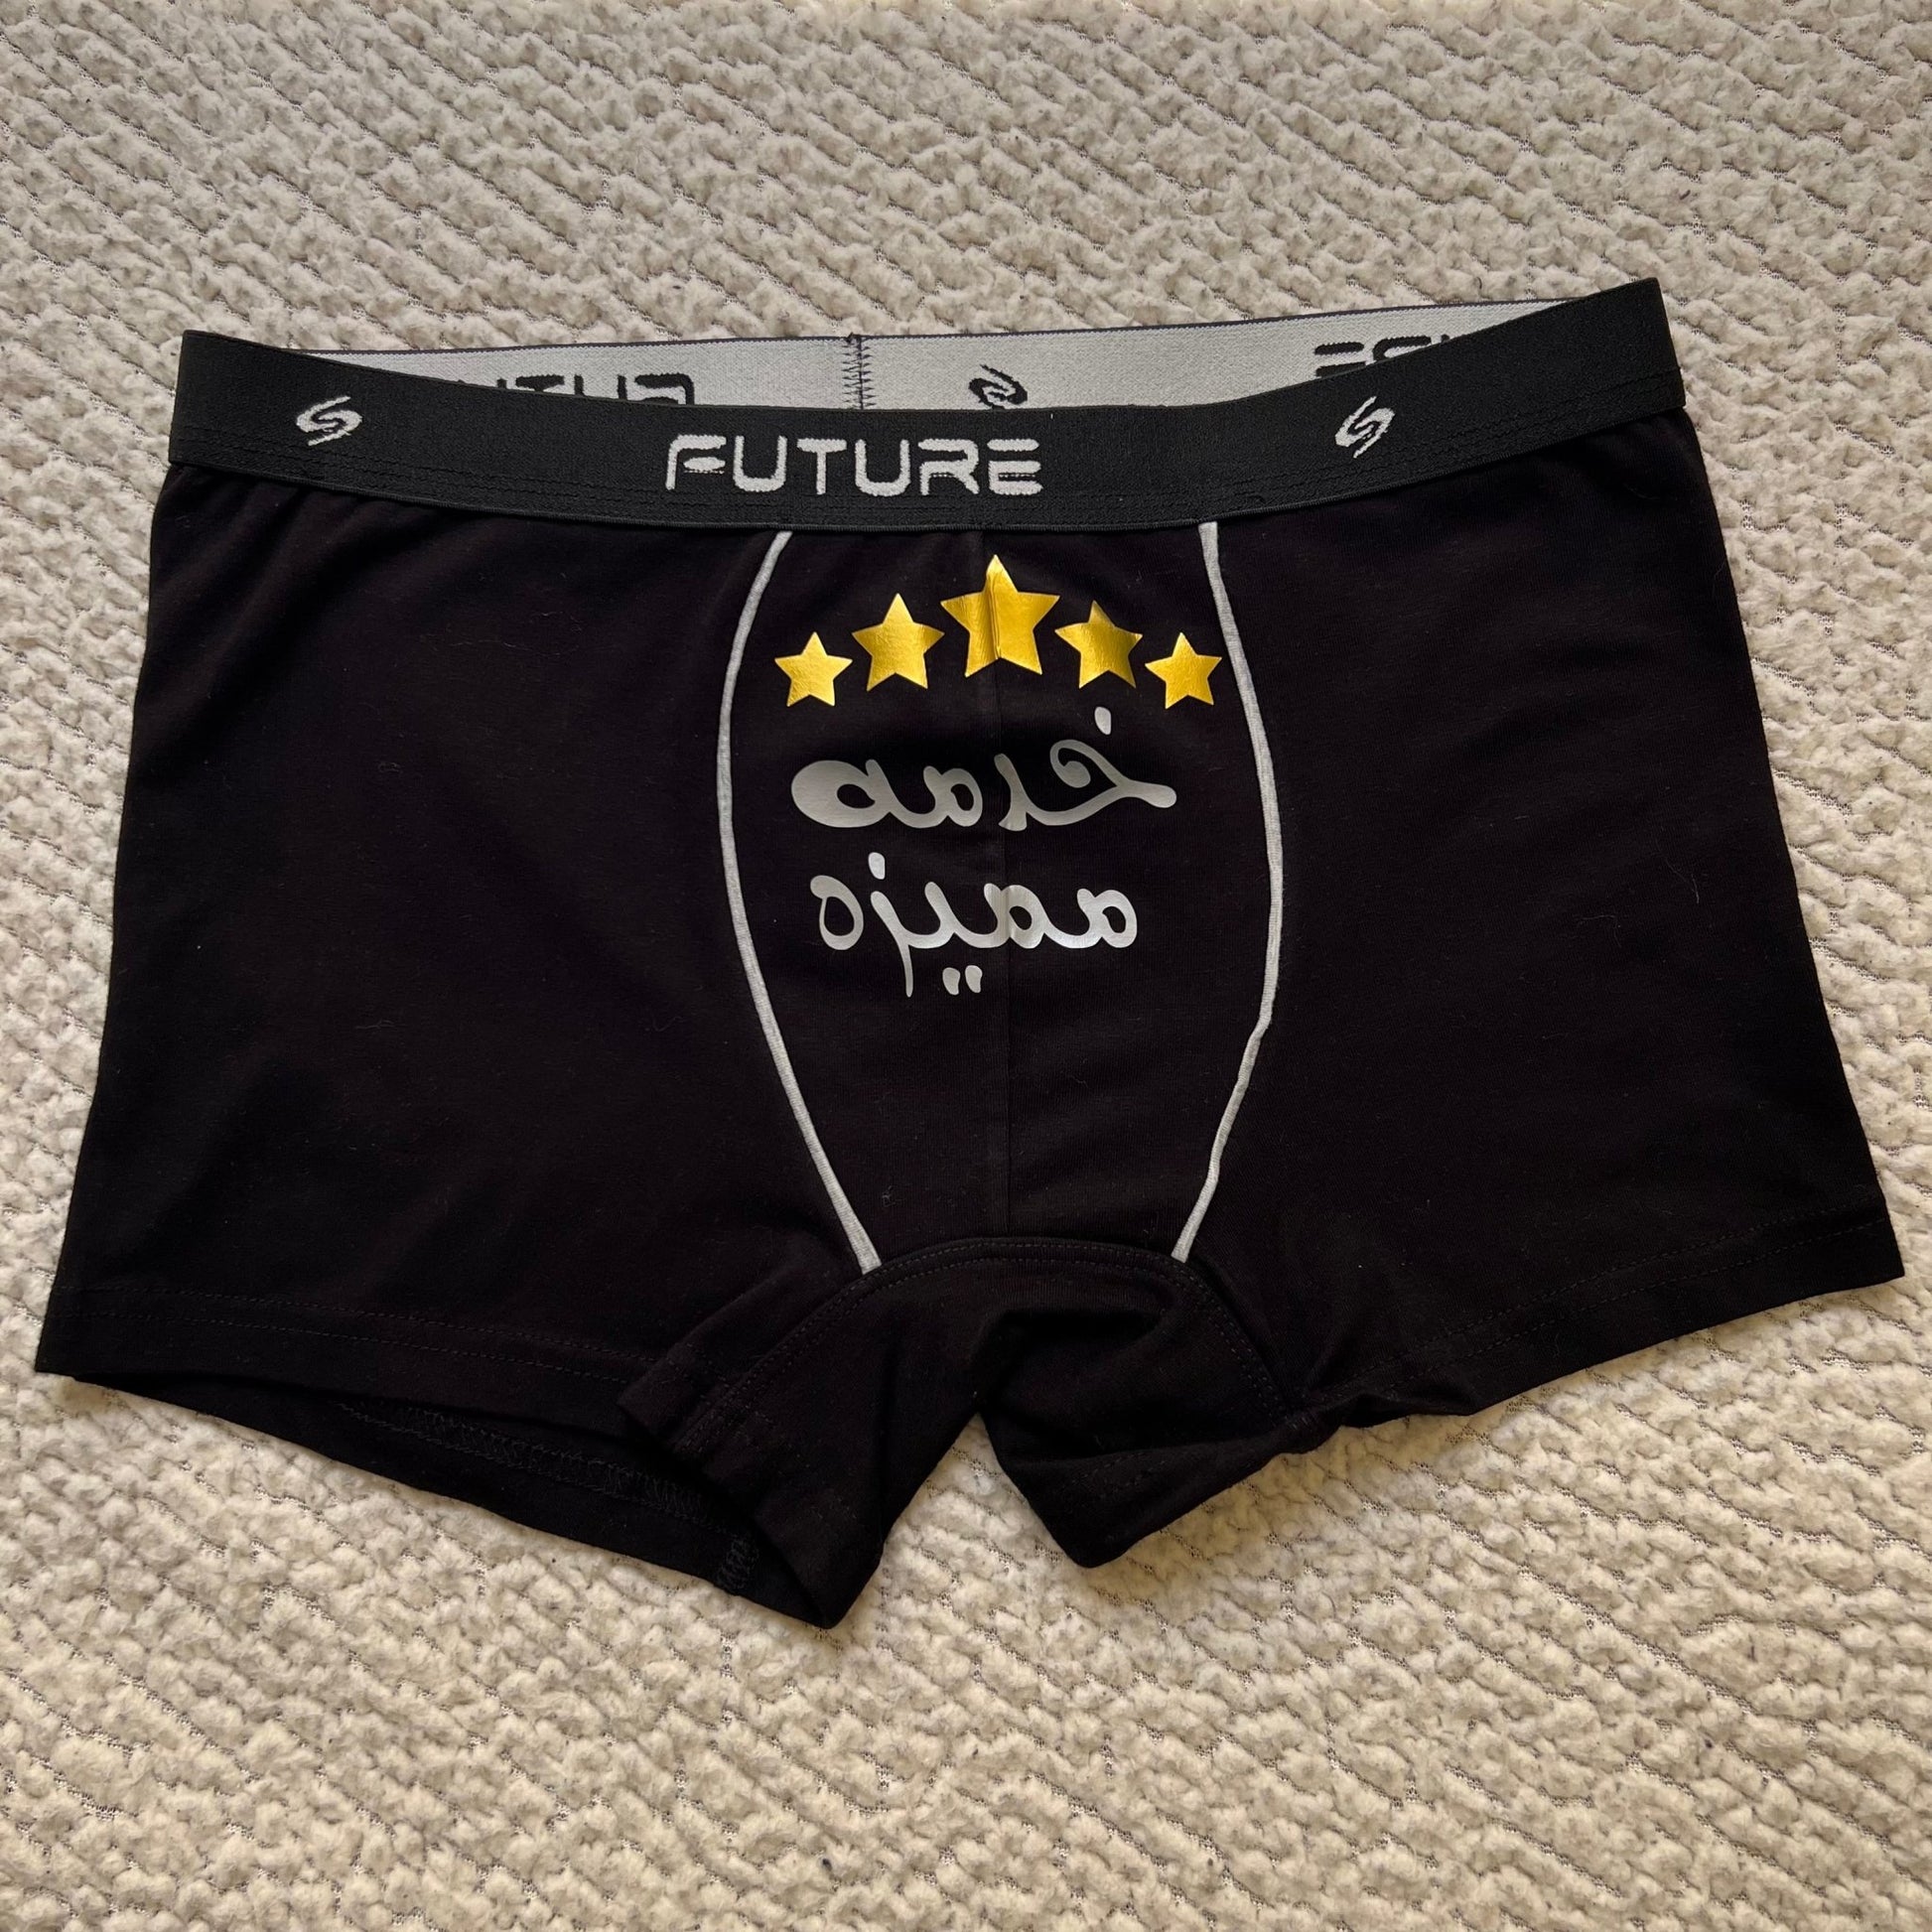 Men underwear - 5 Stars - Etba3lly